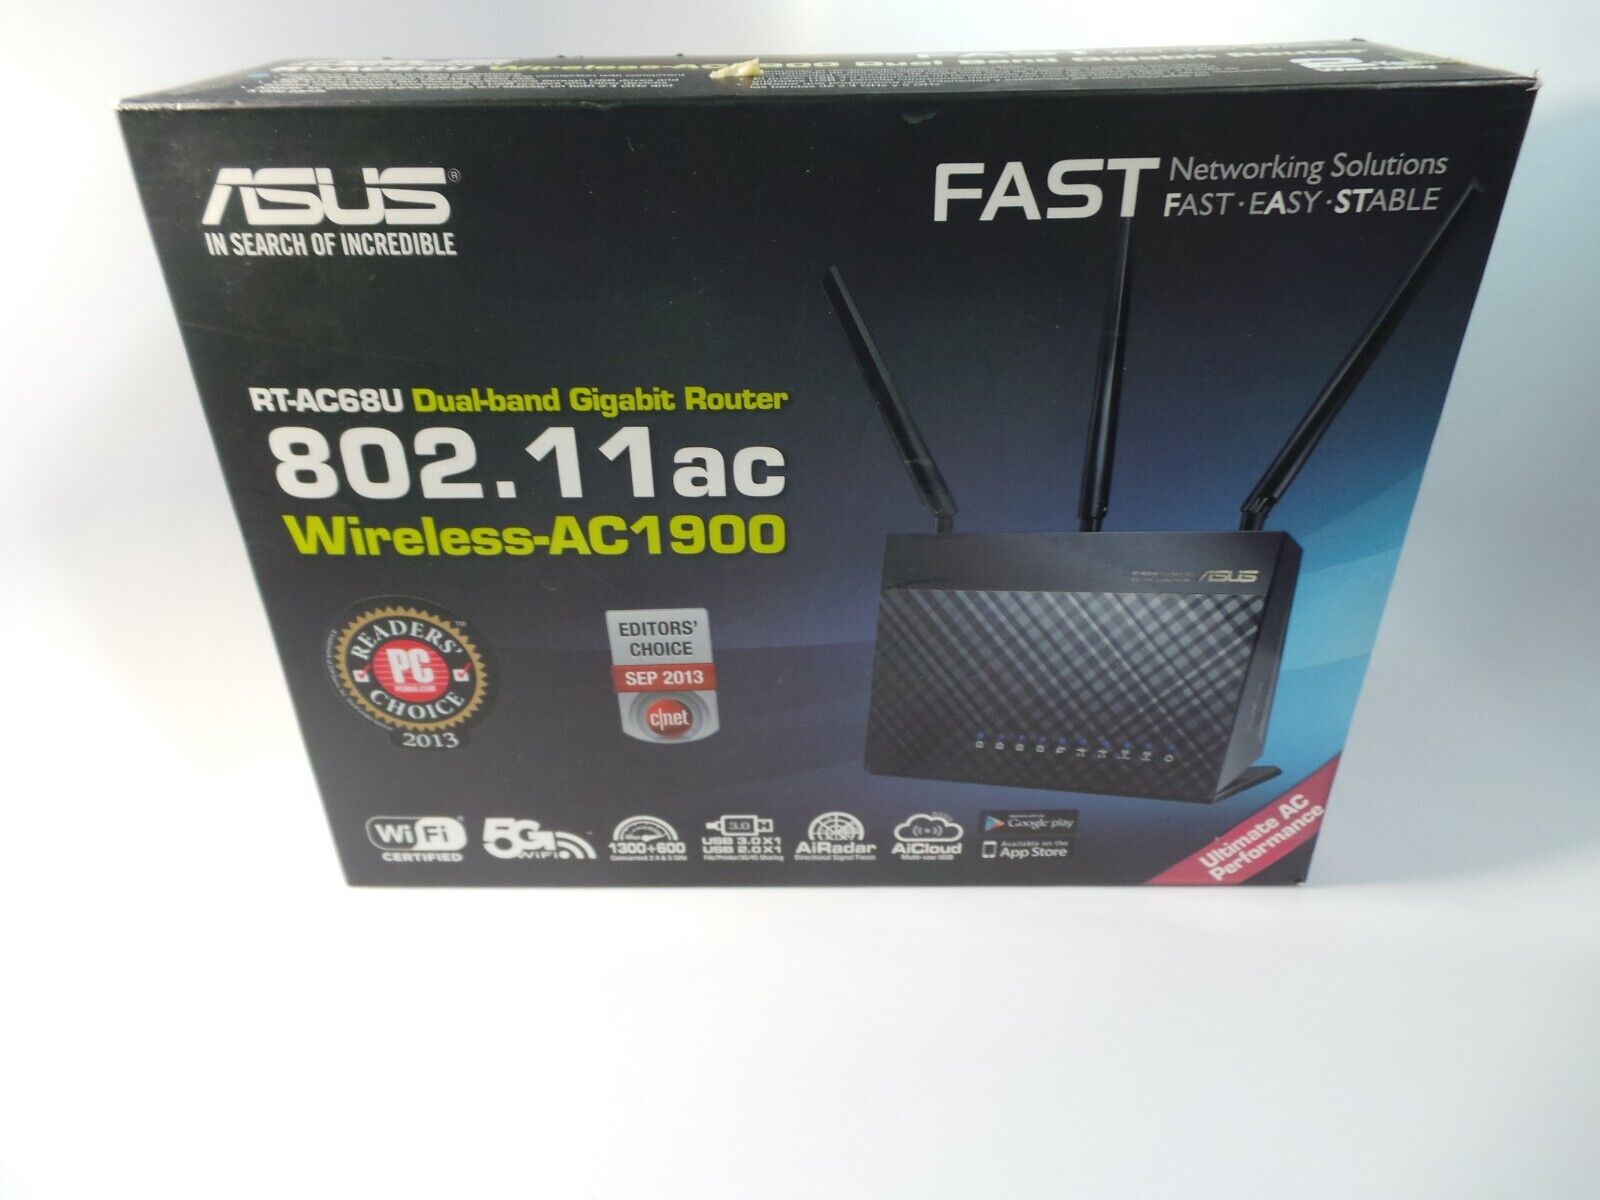 ASUS RT-AC68U AC1900 1300 Mbps 4 Port Gigabit Wireless AC Router